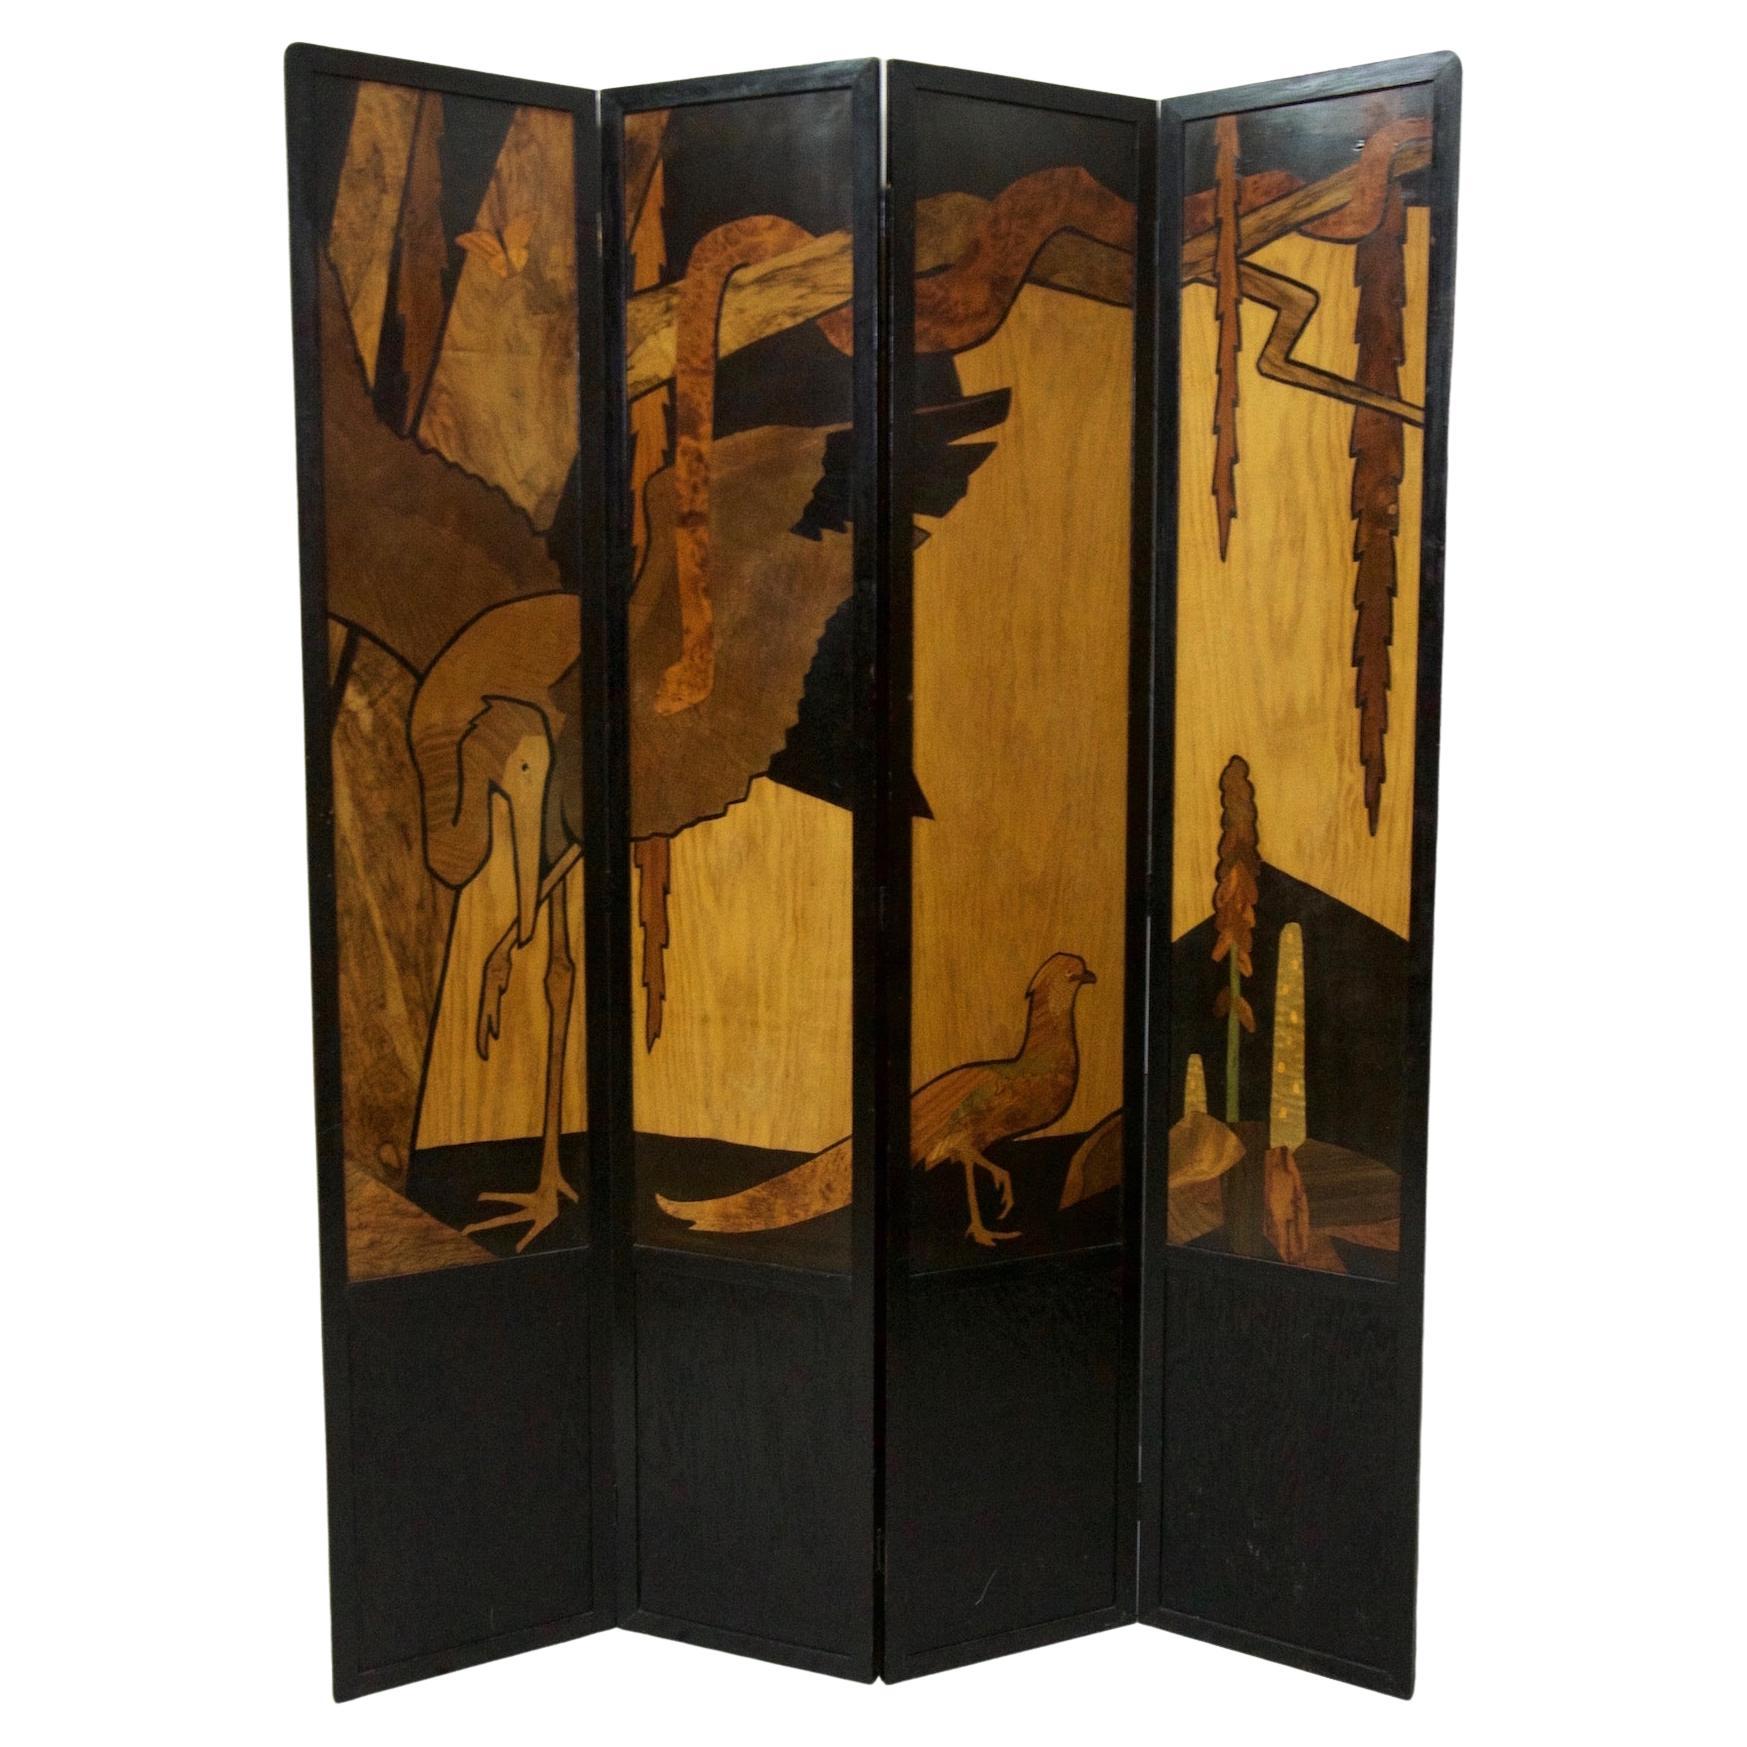 Rowley Gallery 4 Foldes Screen, 'the Jungle' von William Arthur Chase